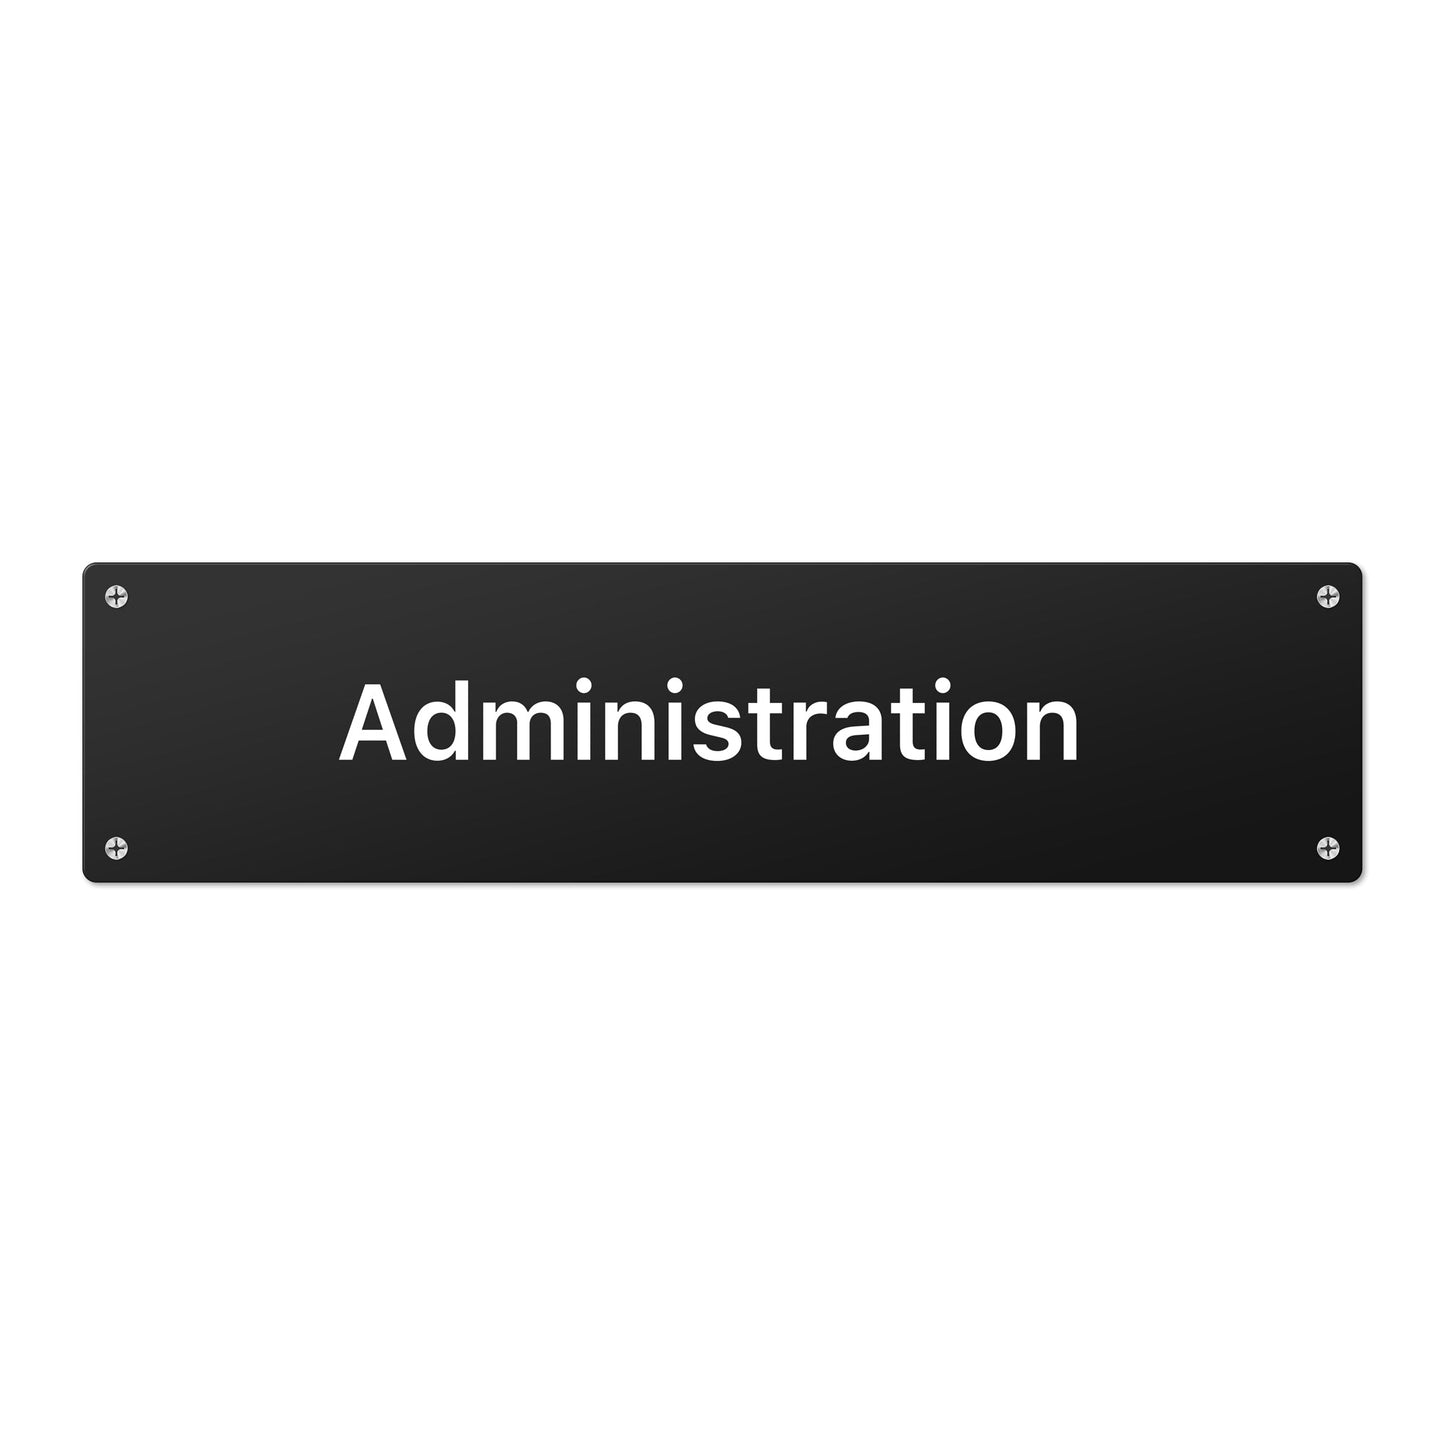 Administration